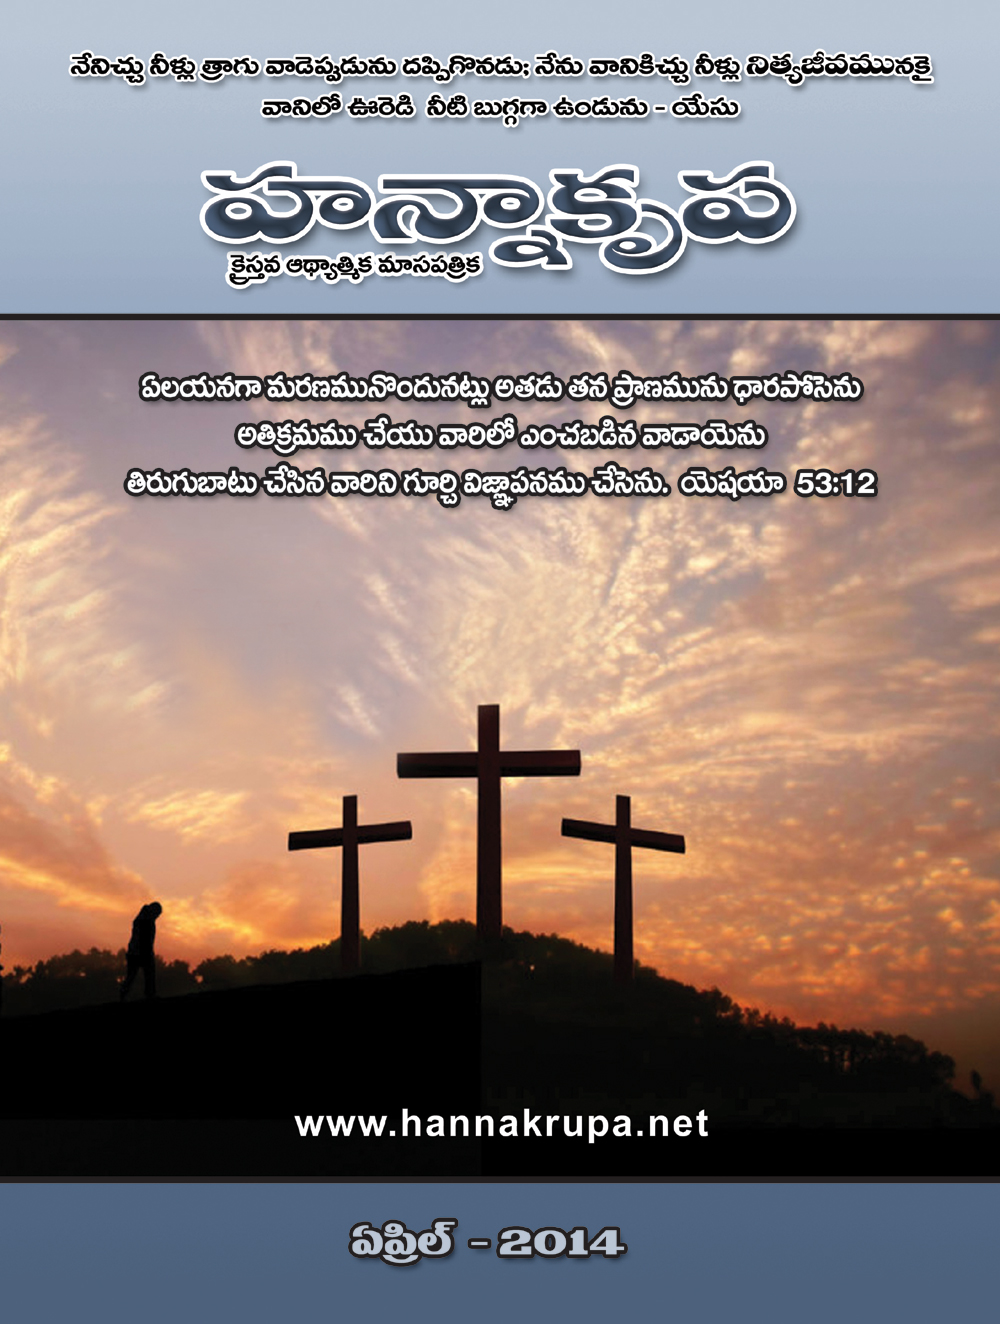 Hanna Krupa Devotional Monthly Magazine - Contact Us